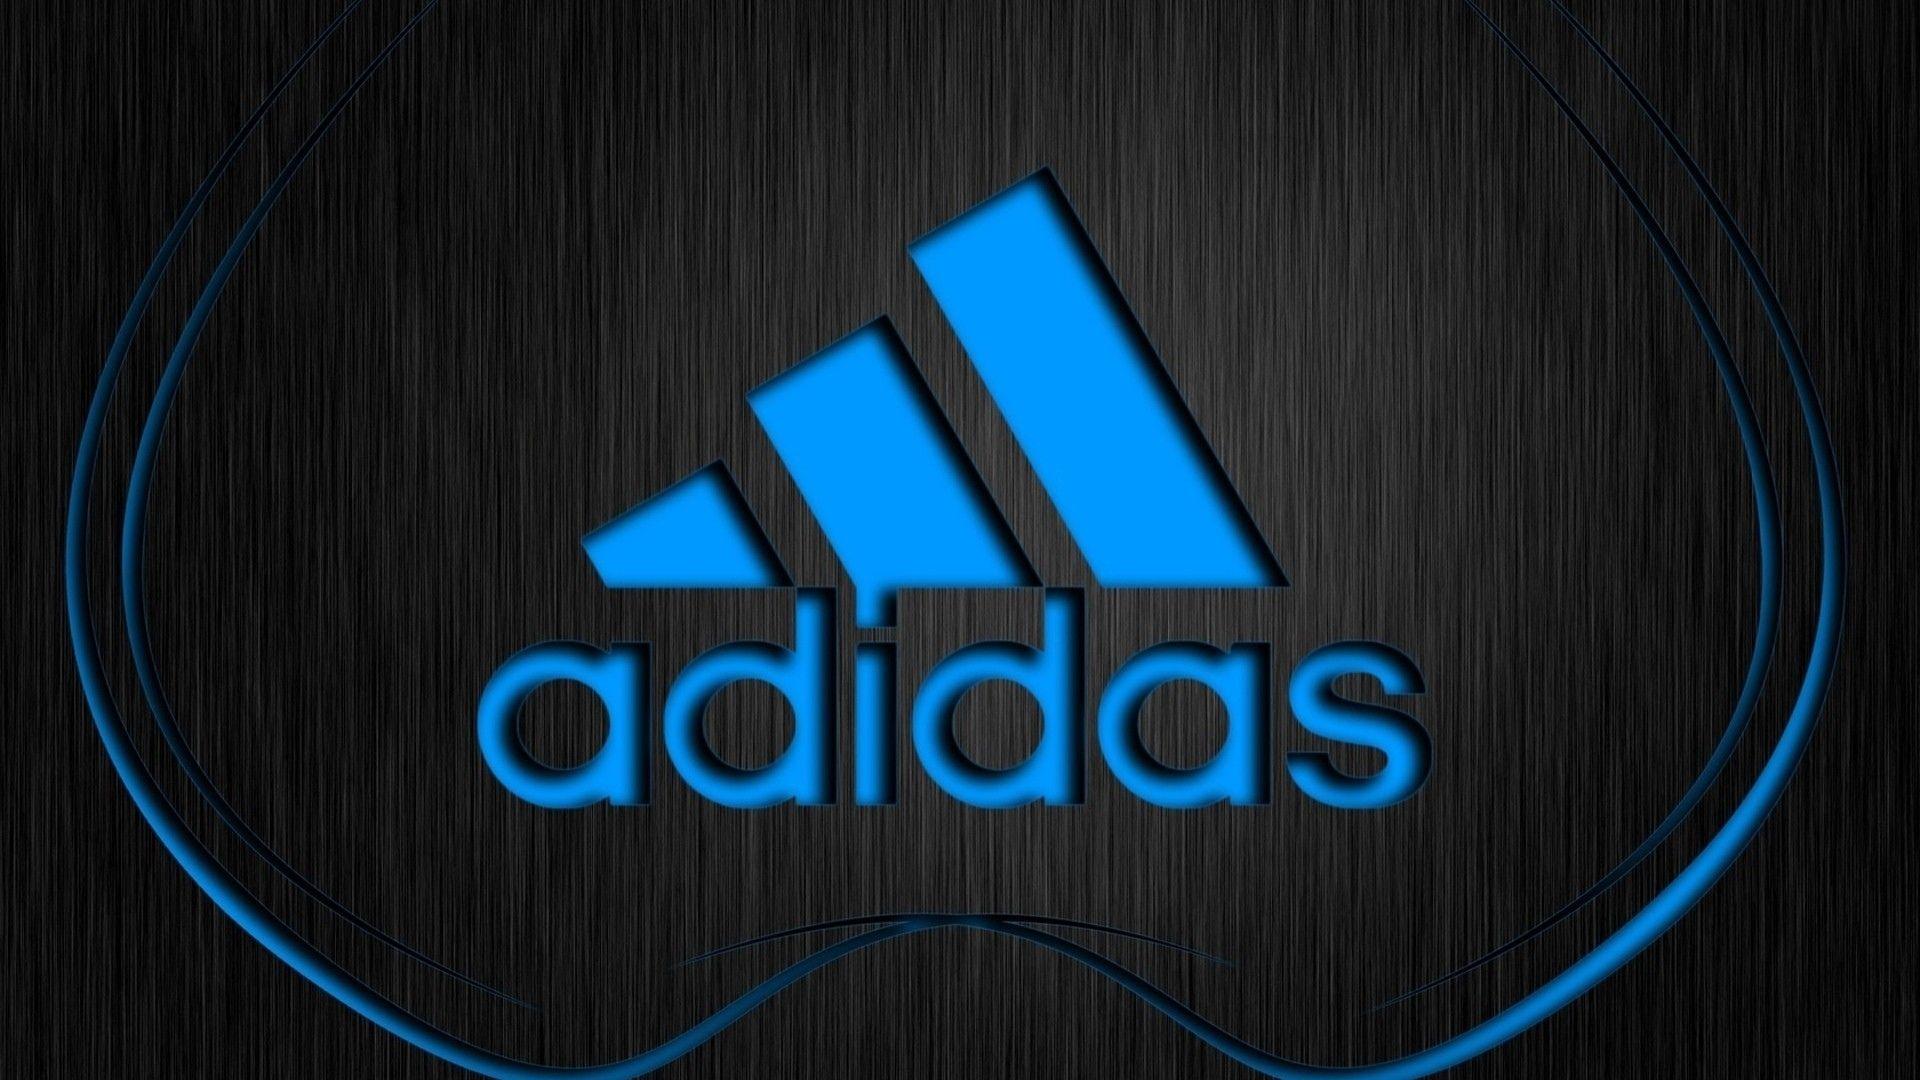 Adidas HD Wallpaper